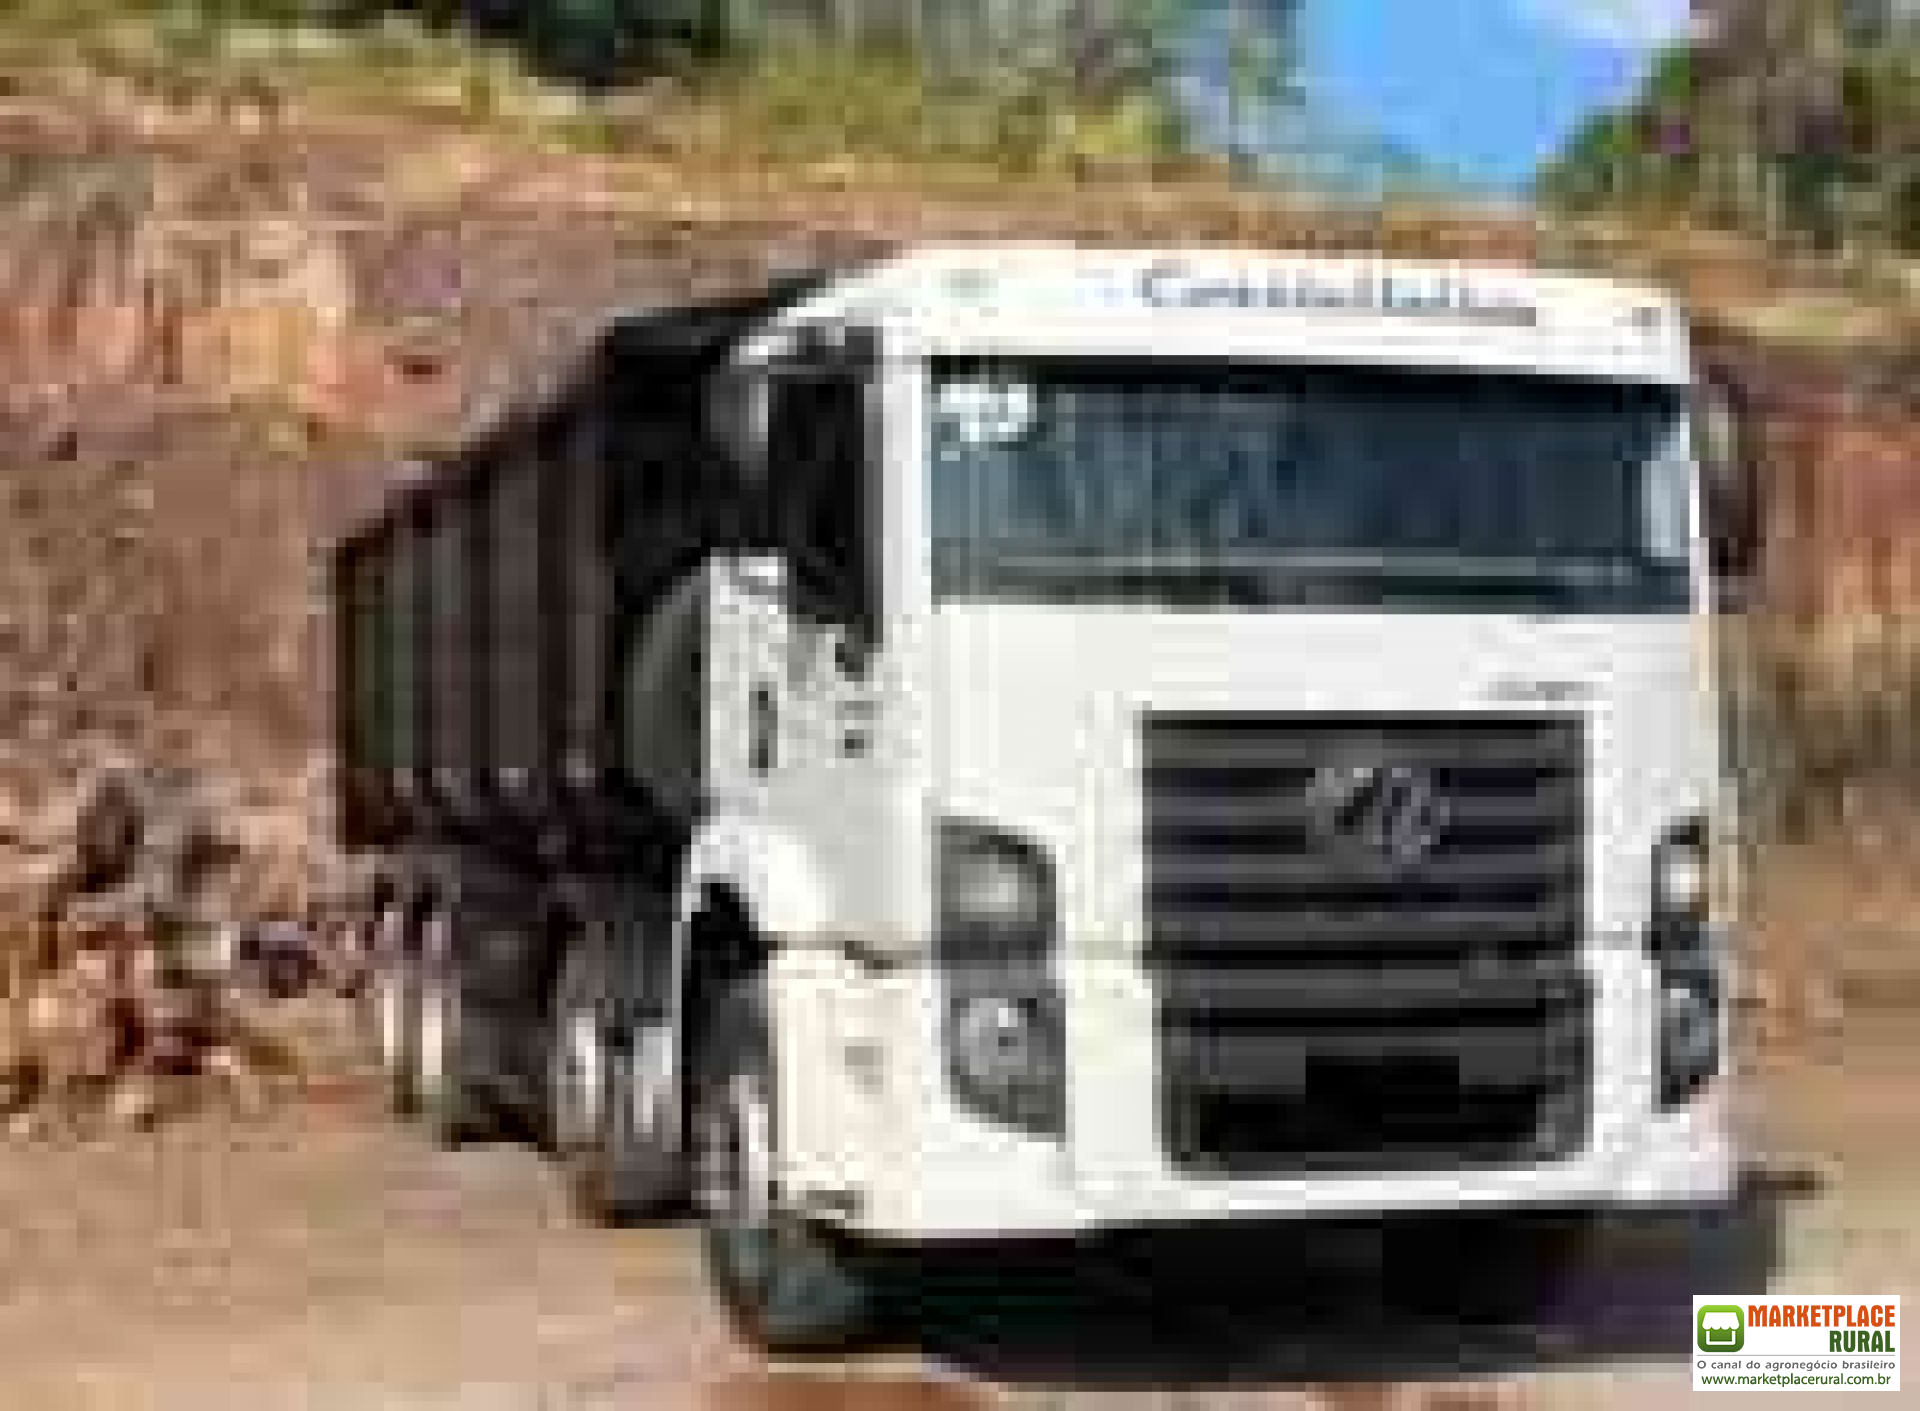 Adesivos Caminhões Constellation Tanque Bi Truck